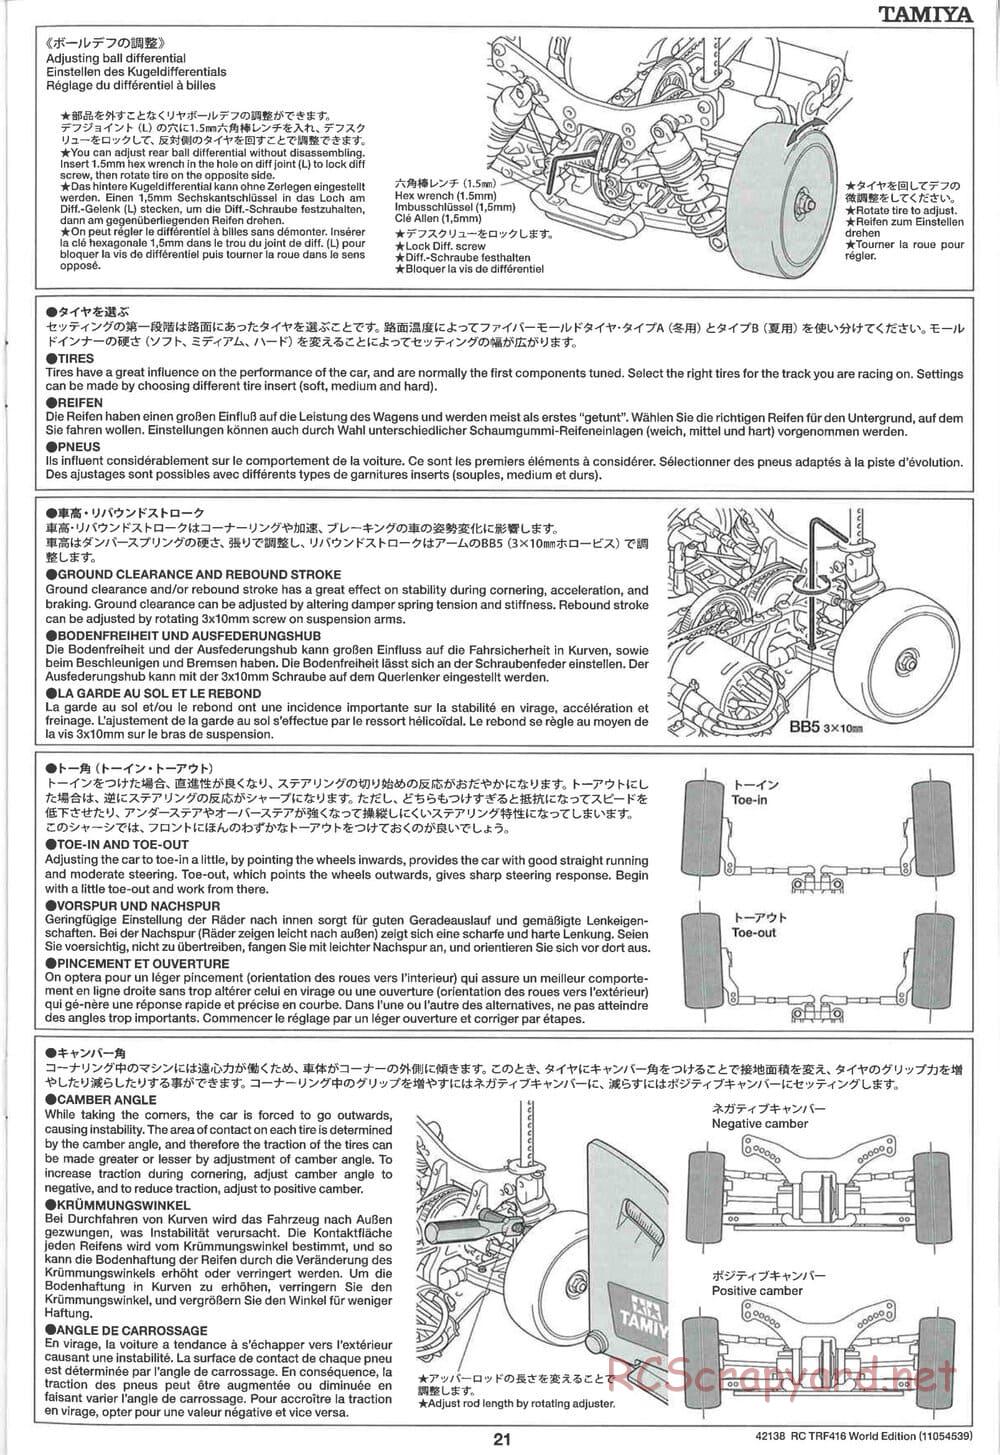 Tamiya - TRF416 World Edition Chassis - Manual - Page 21